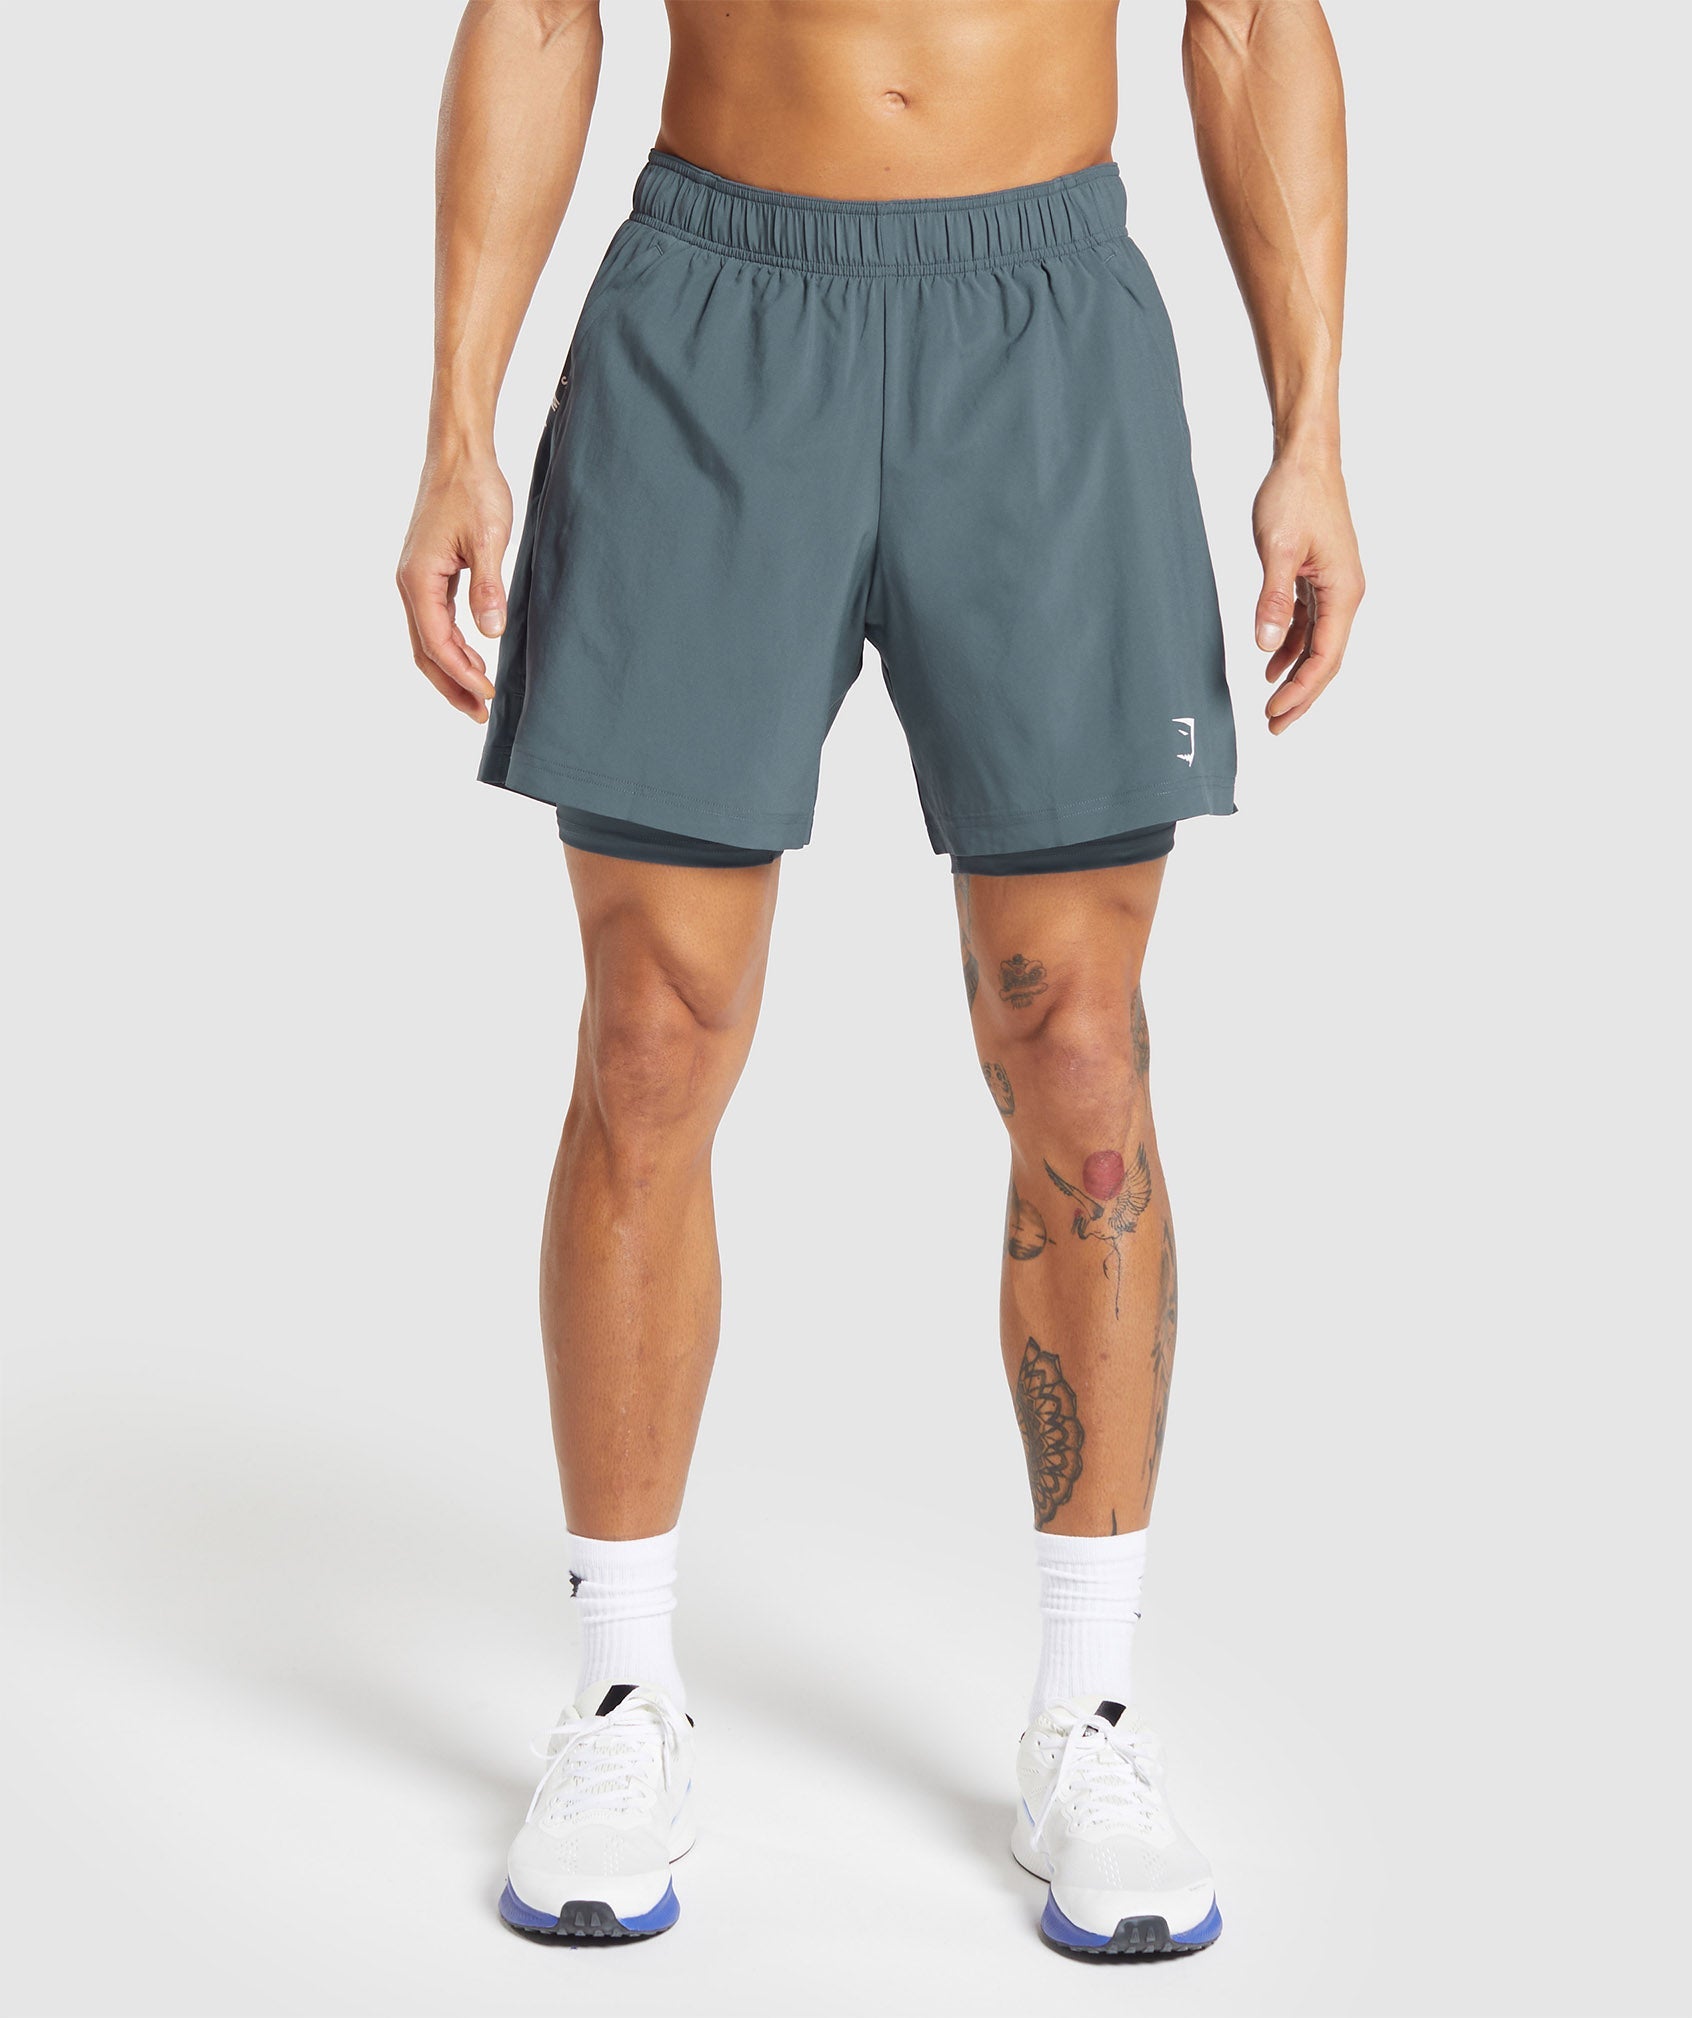 Gymshark Sport 7 2 in 1 Shorts - Titanium Blue